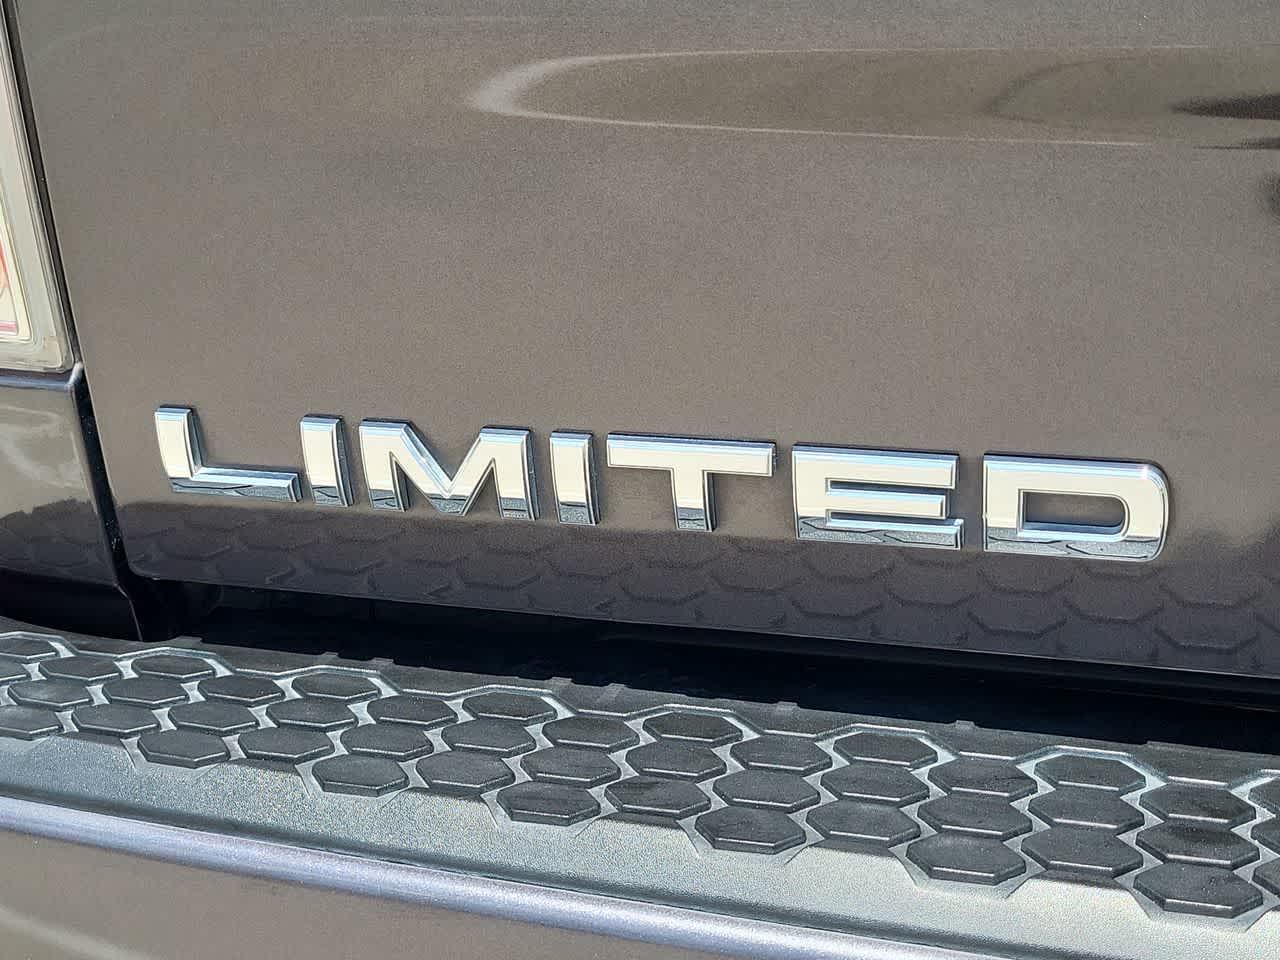 2015 Ram 1500 Laramie Limited 4WD Crew Cab 149 15